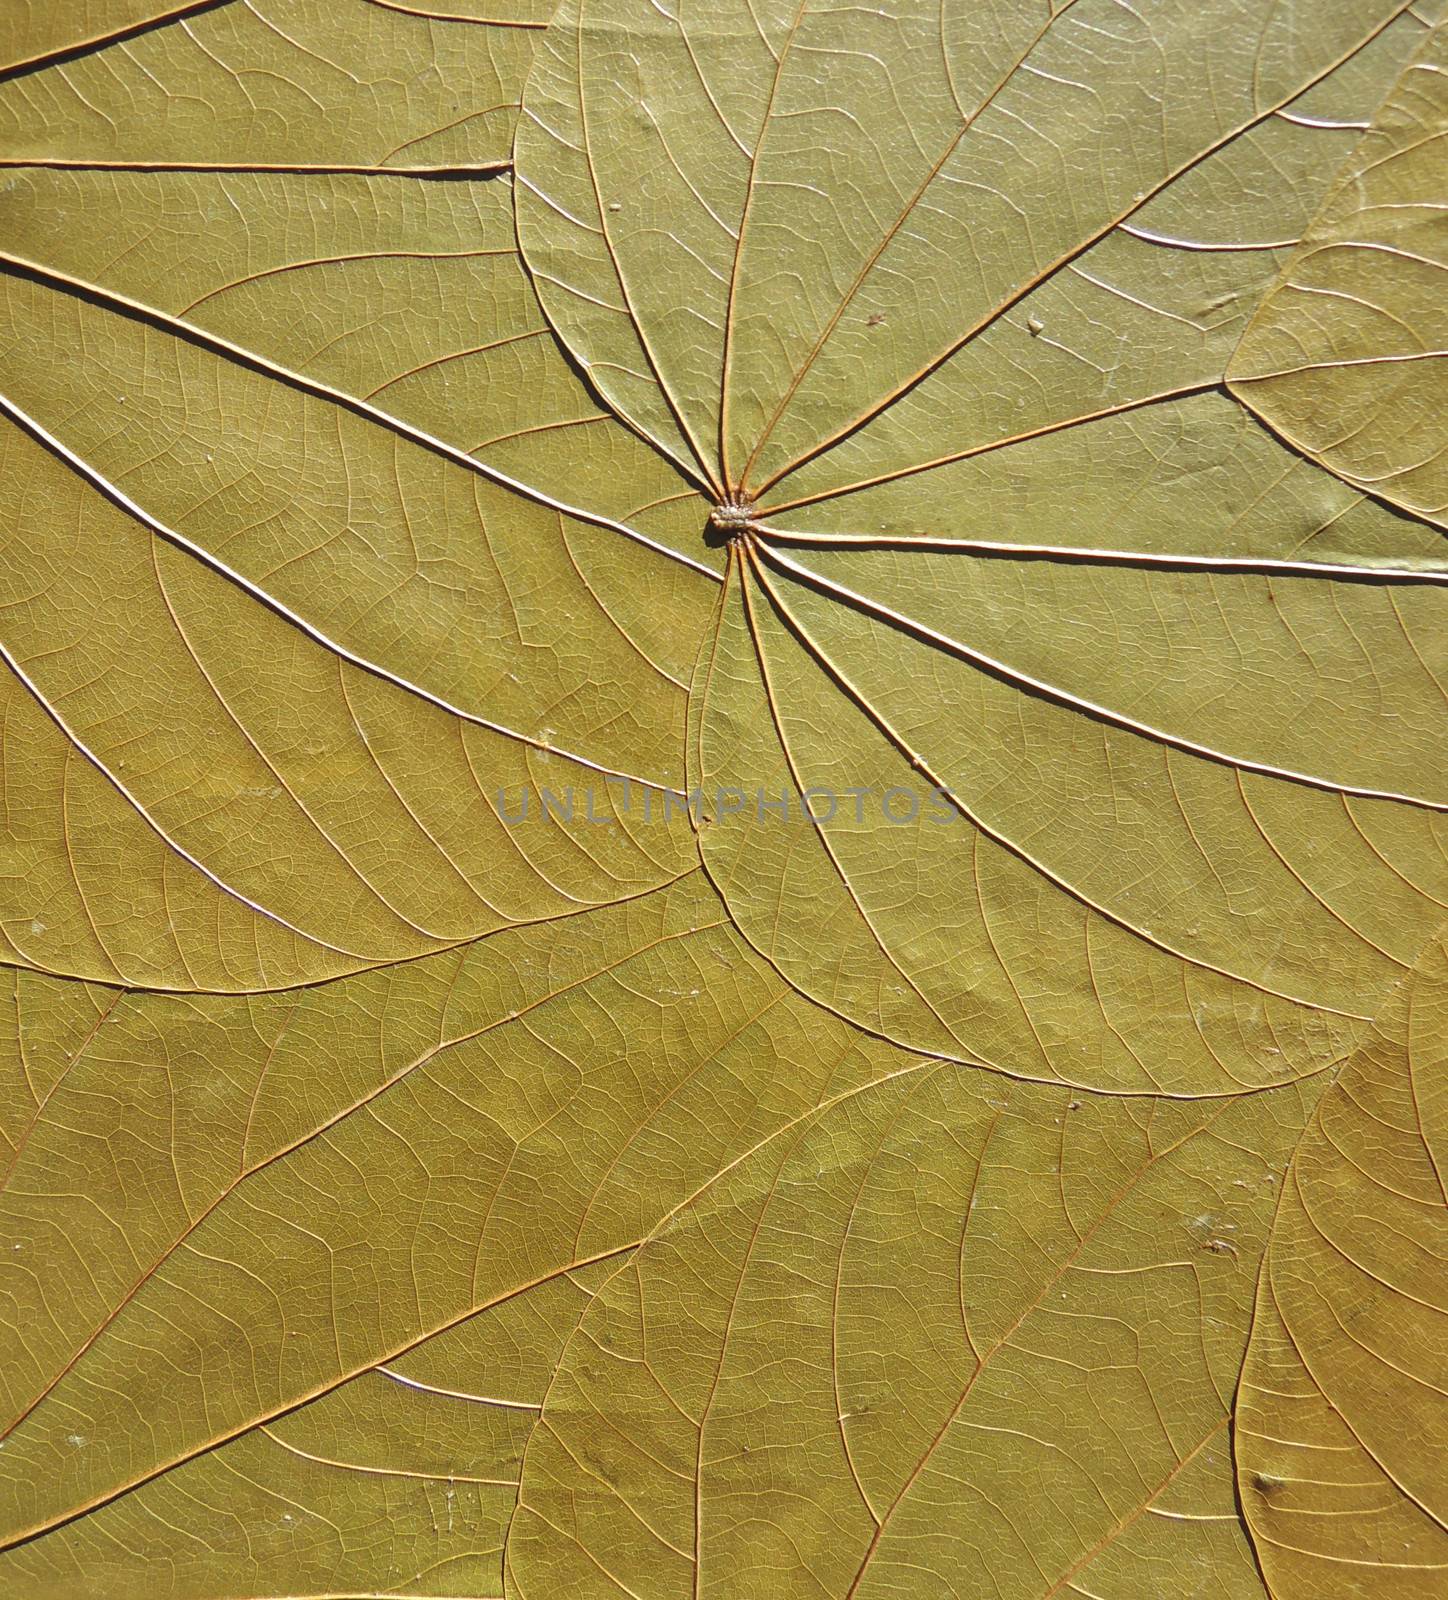 Dry leaf macro by MalyDesigner